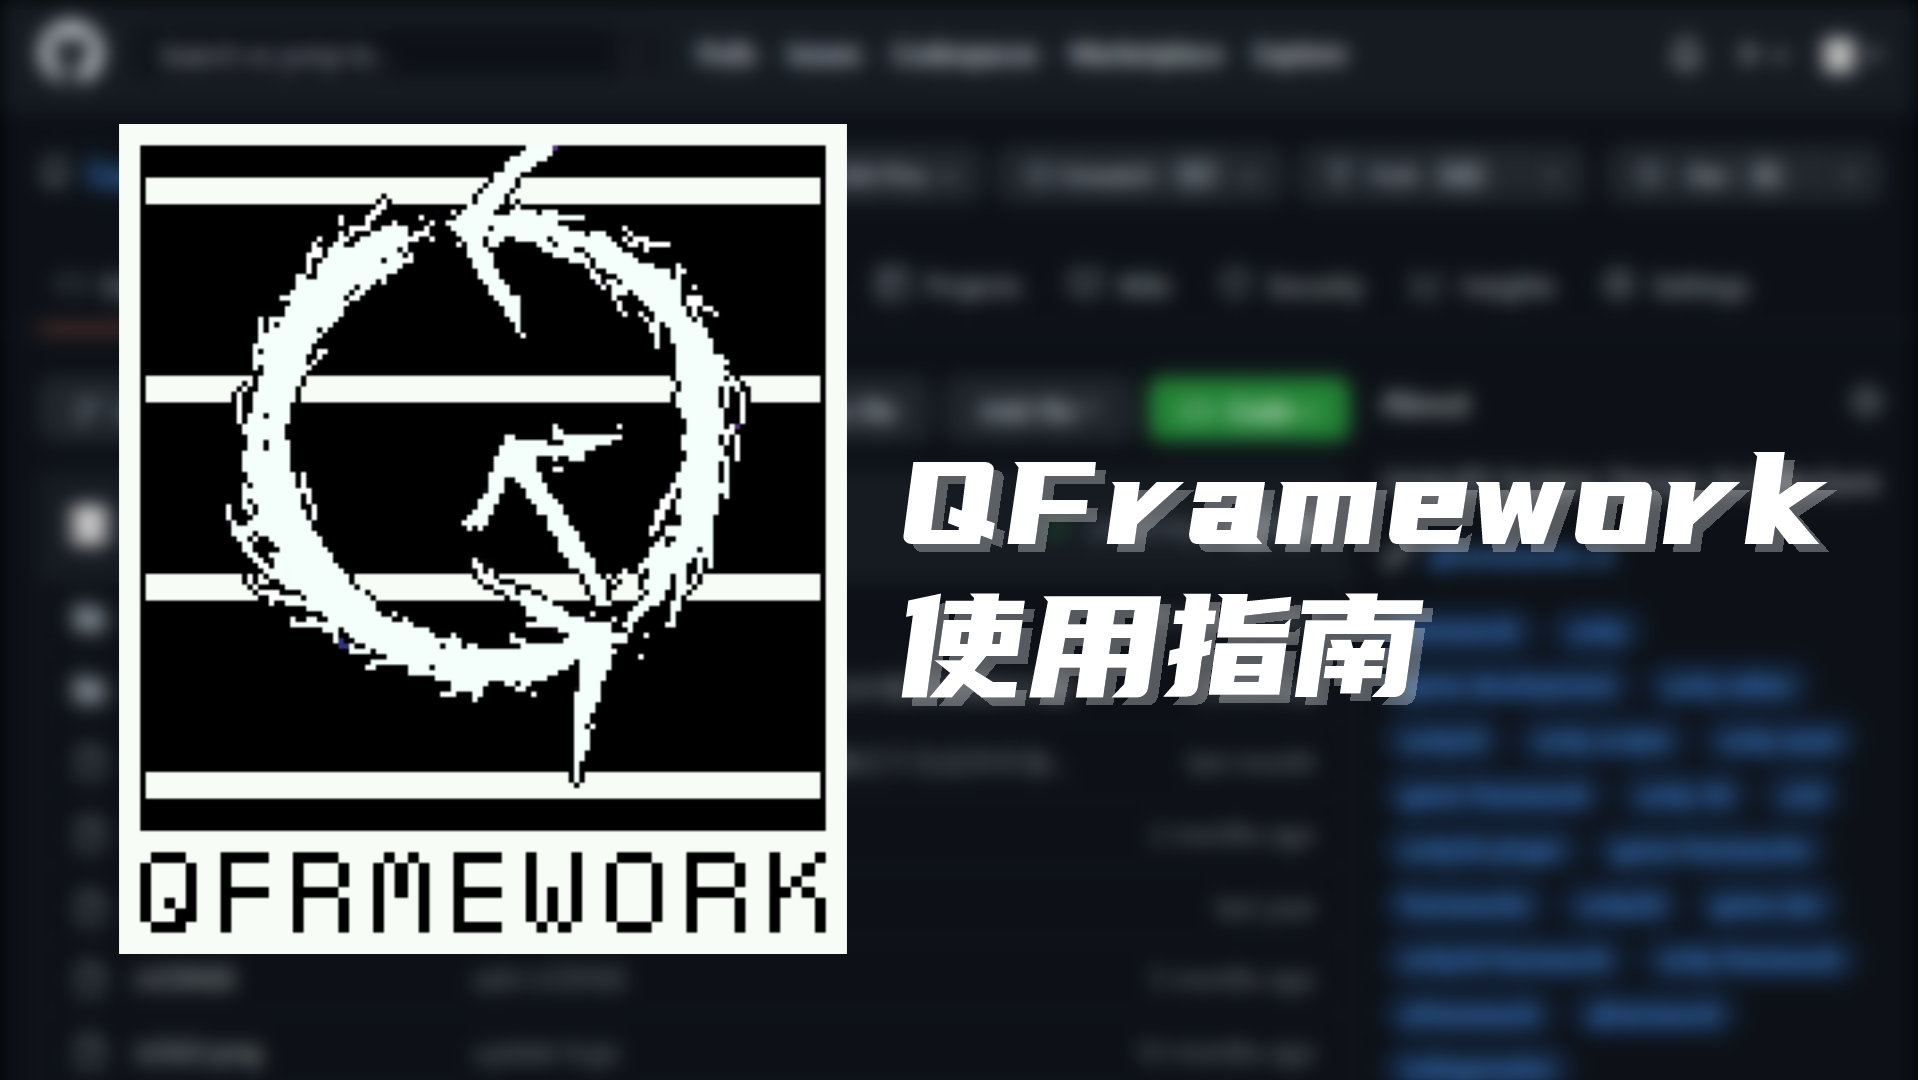 【Unity 框架】QFramework v1.0 使用指南 工具篇：07. AudioKit 音频管理解决方案 | Unity 游戏框架 | Unity 游戏开发 | Unity 独立游戏 